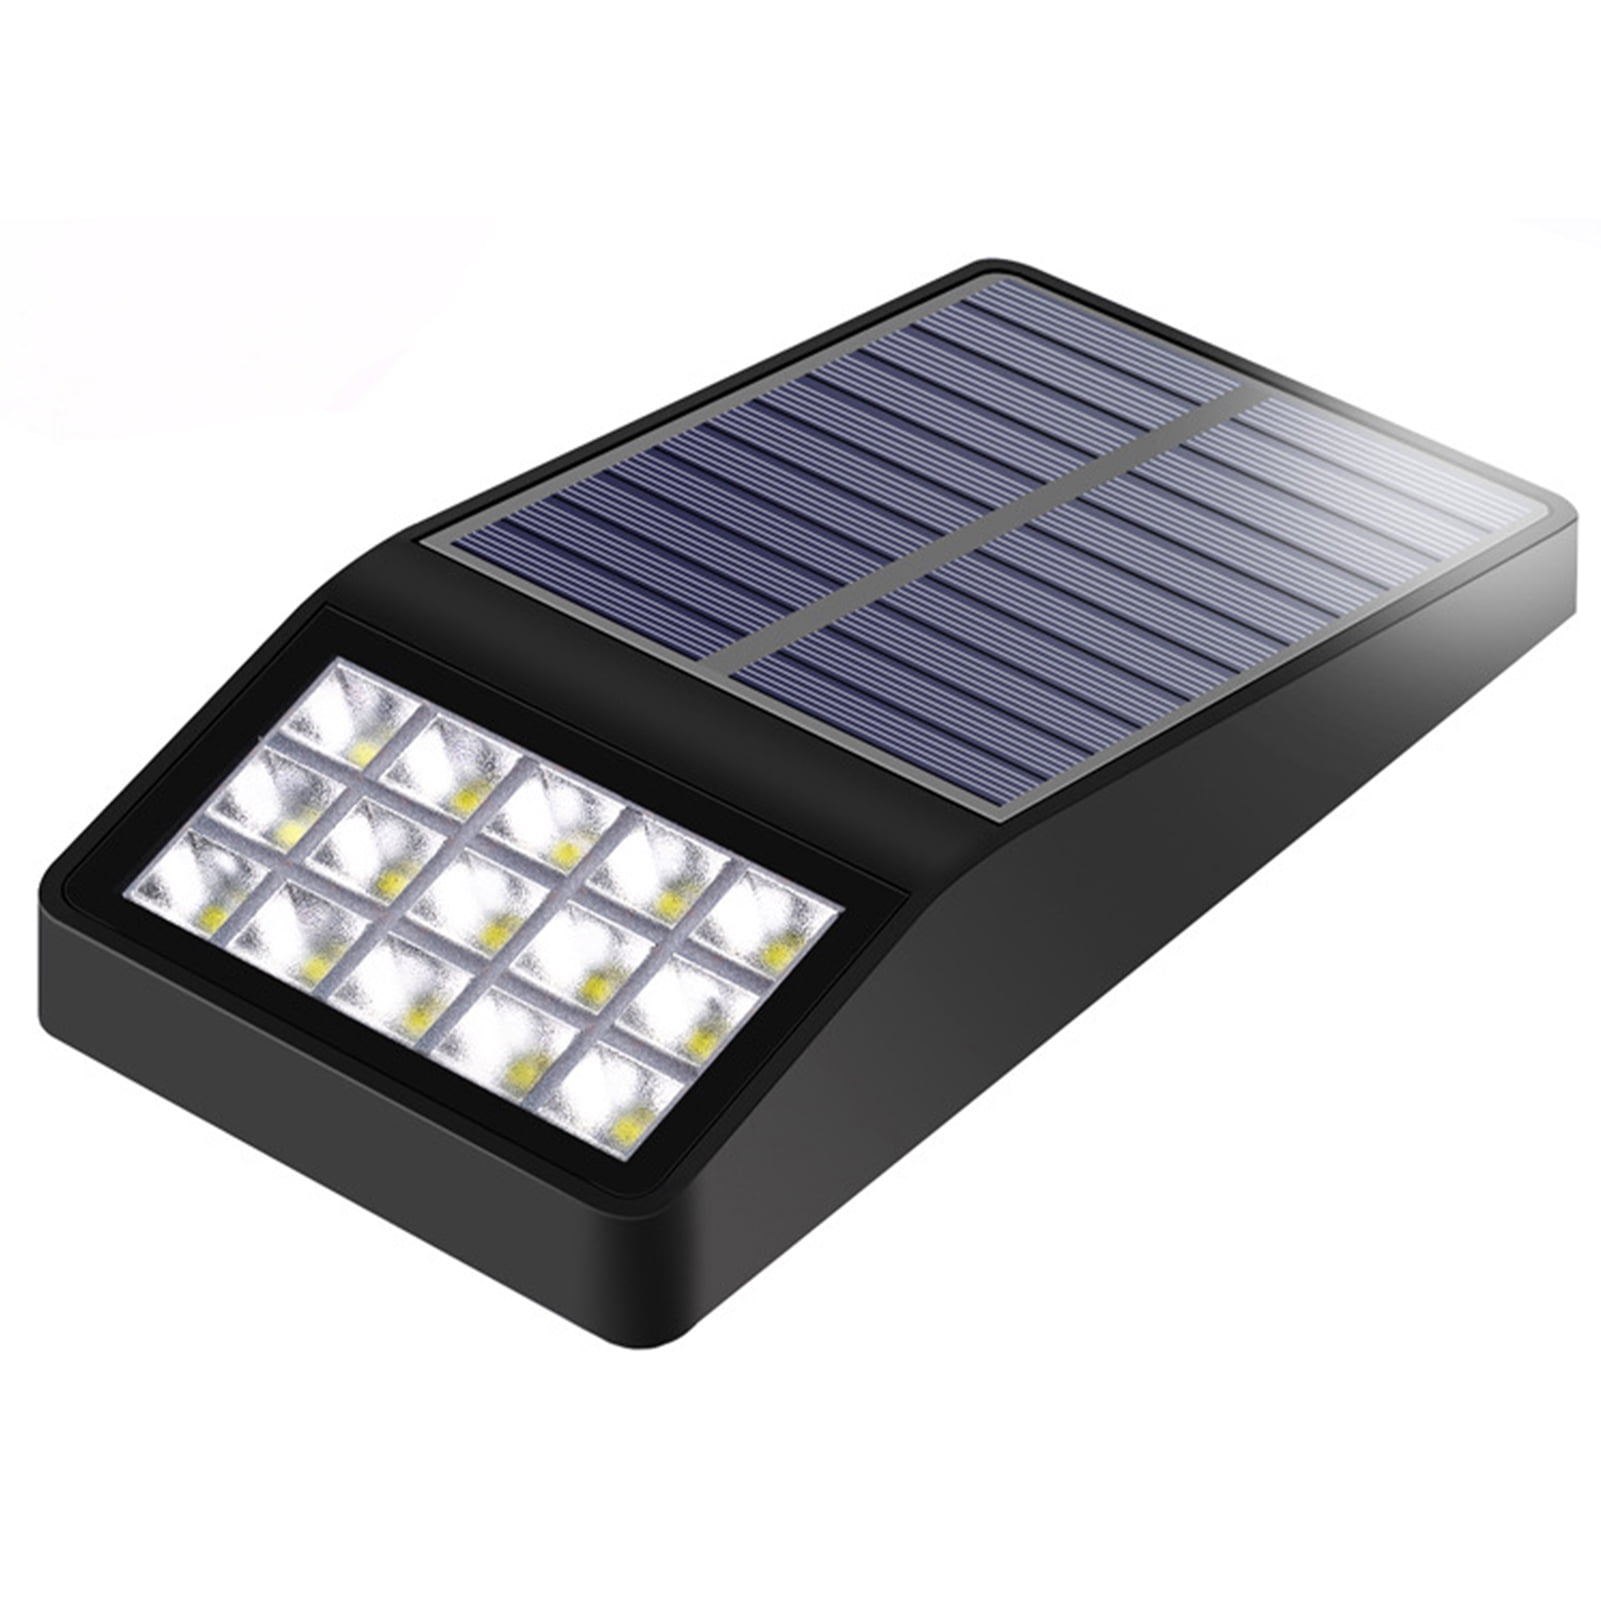 4X20 LED Solar Powered PIR Motion Sensor Light Outdoor Garden Security Lights UK 